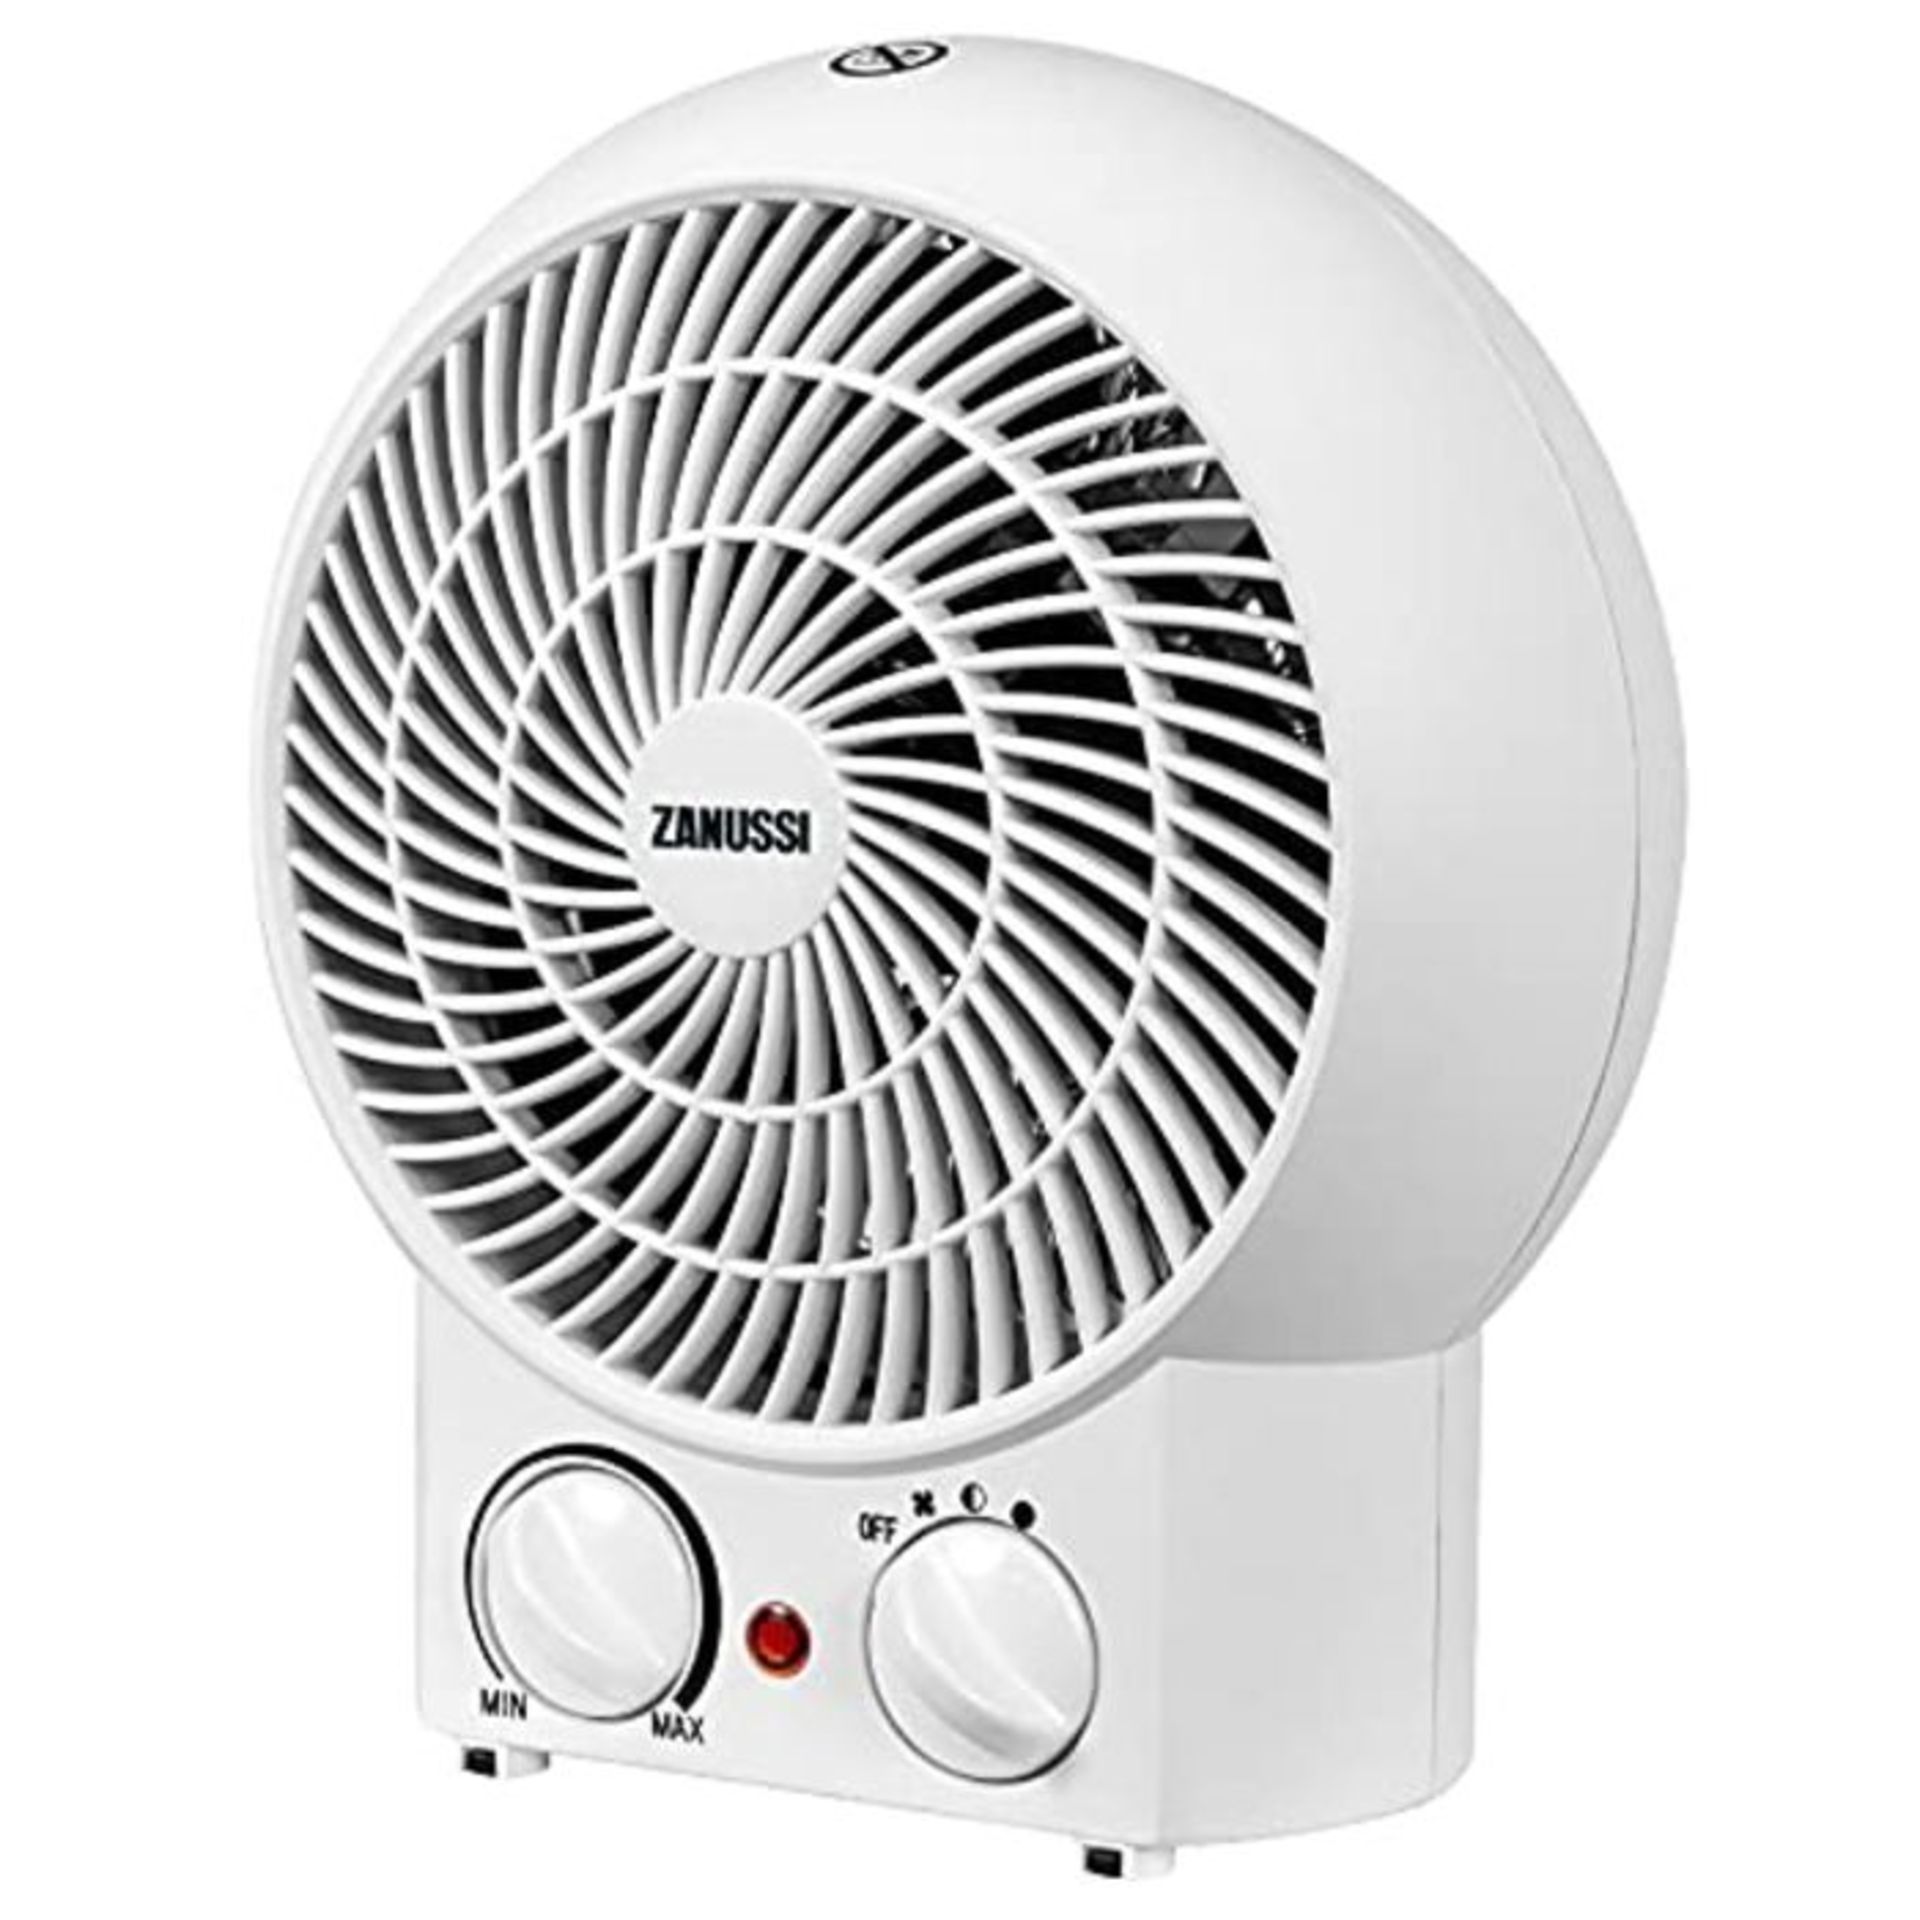 Zanussi ZFH1001 2000W Portable Upright Fan Heater, Two Heat Settings, Overheat Protect